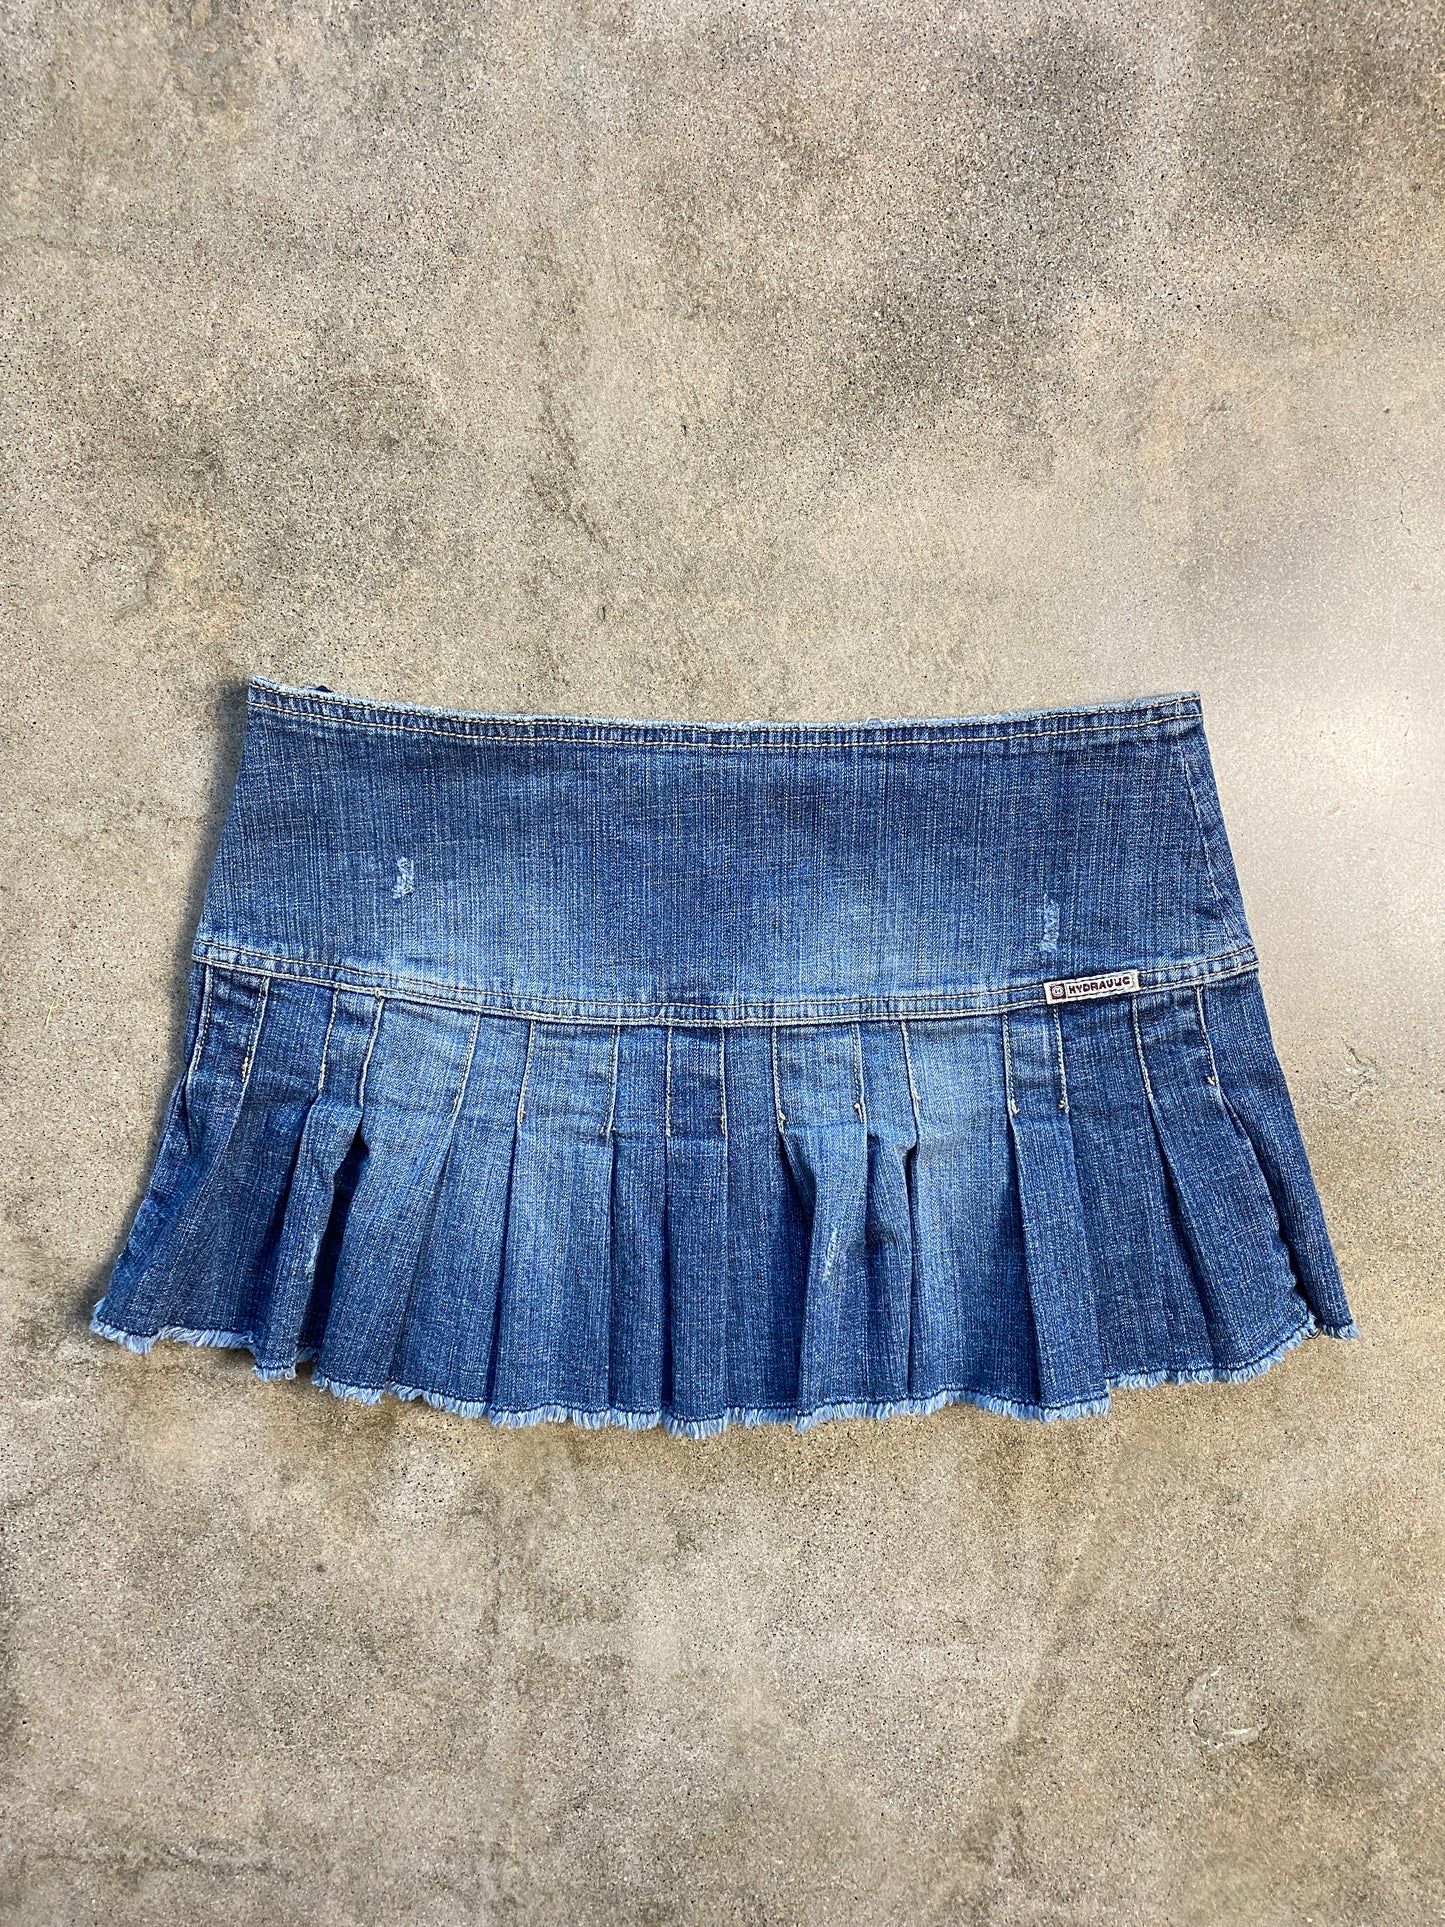 00's Denim Micro Mini Skirt